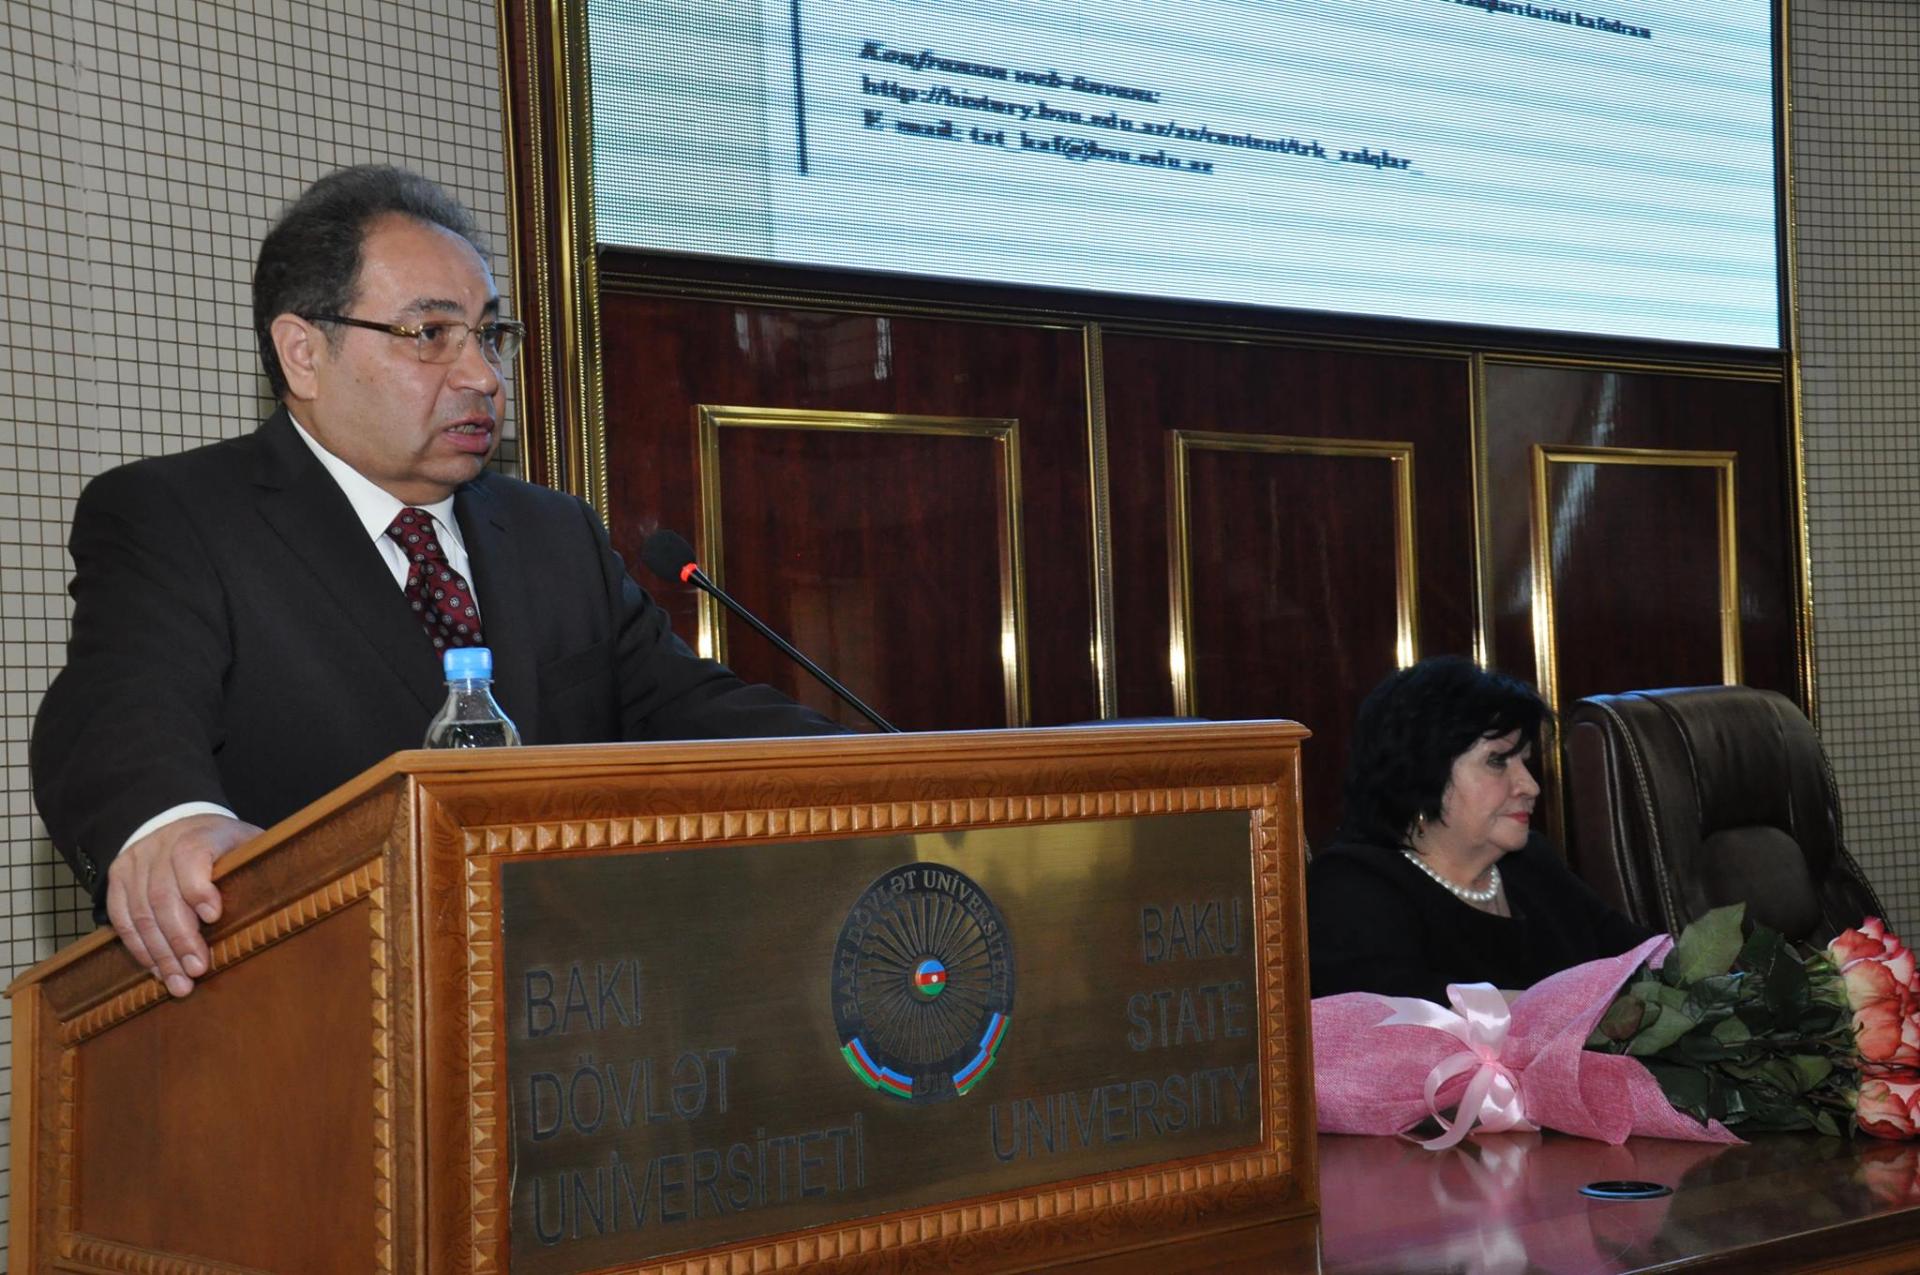 В БГУ прошла конференция на тему исследования и преподавания истории тюркских народов (ФОТО)